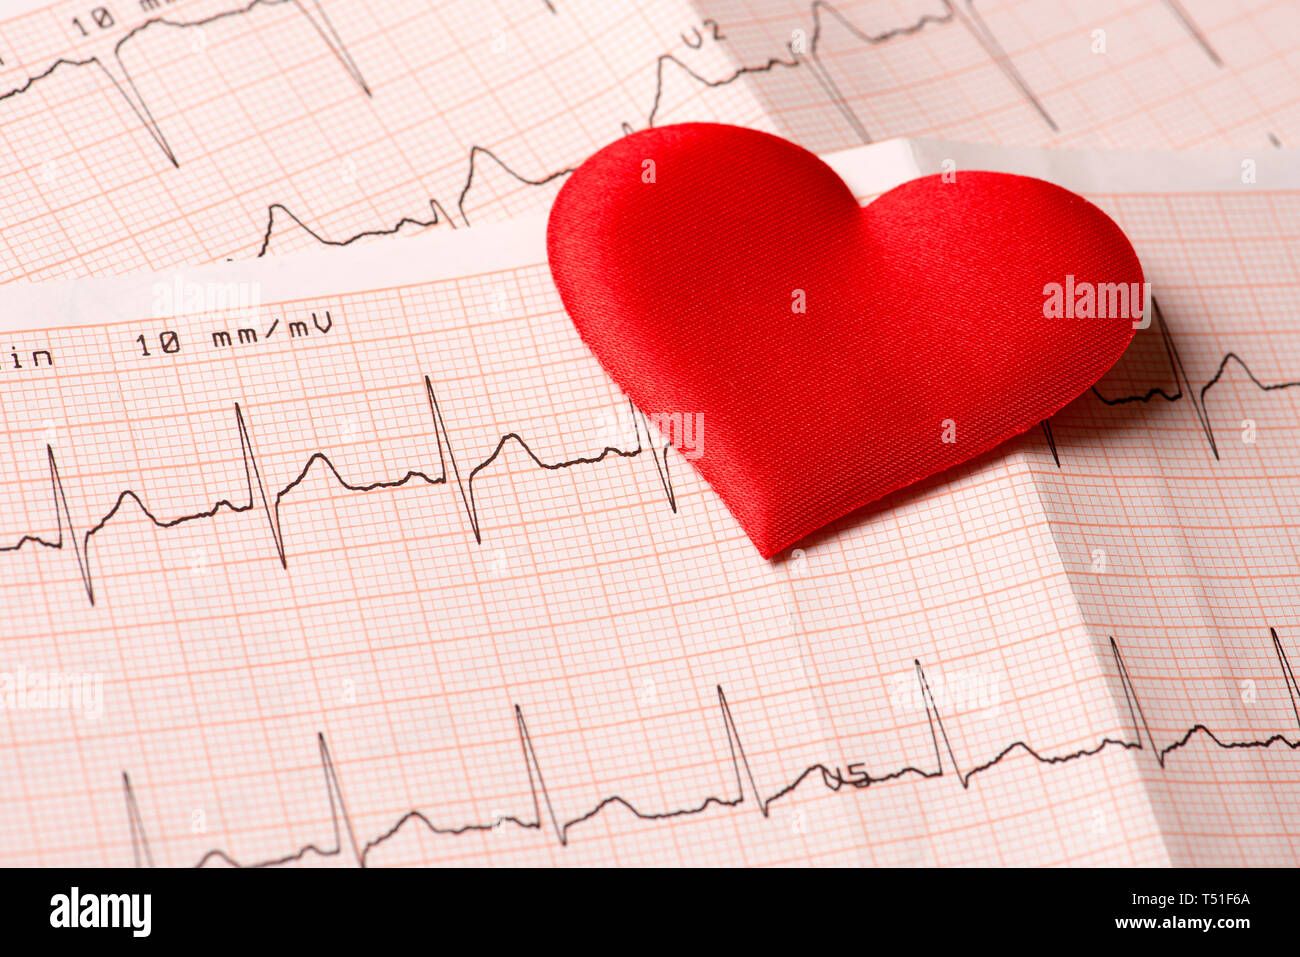 Elektrokardiogramm Chart mit roten Herzen Stockfoto